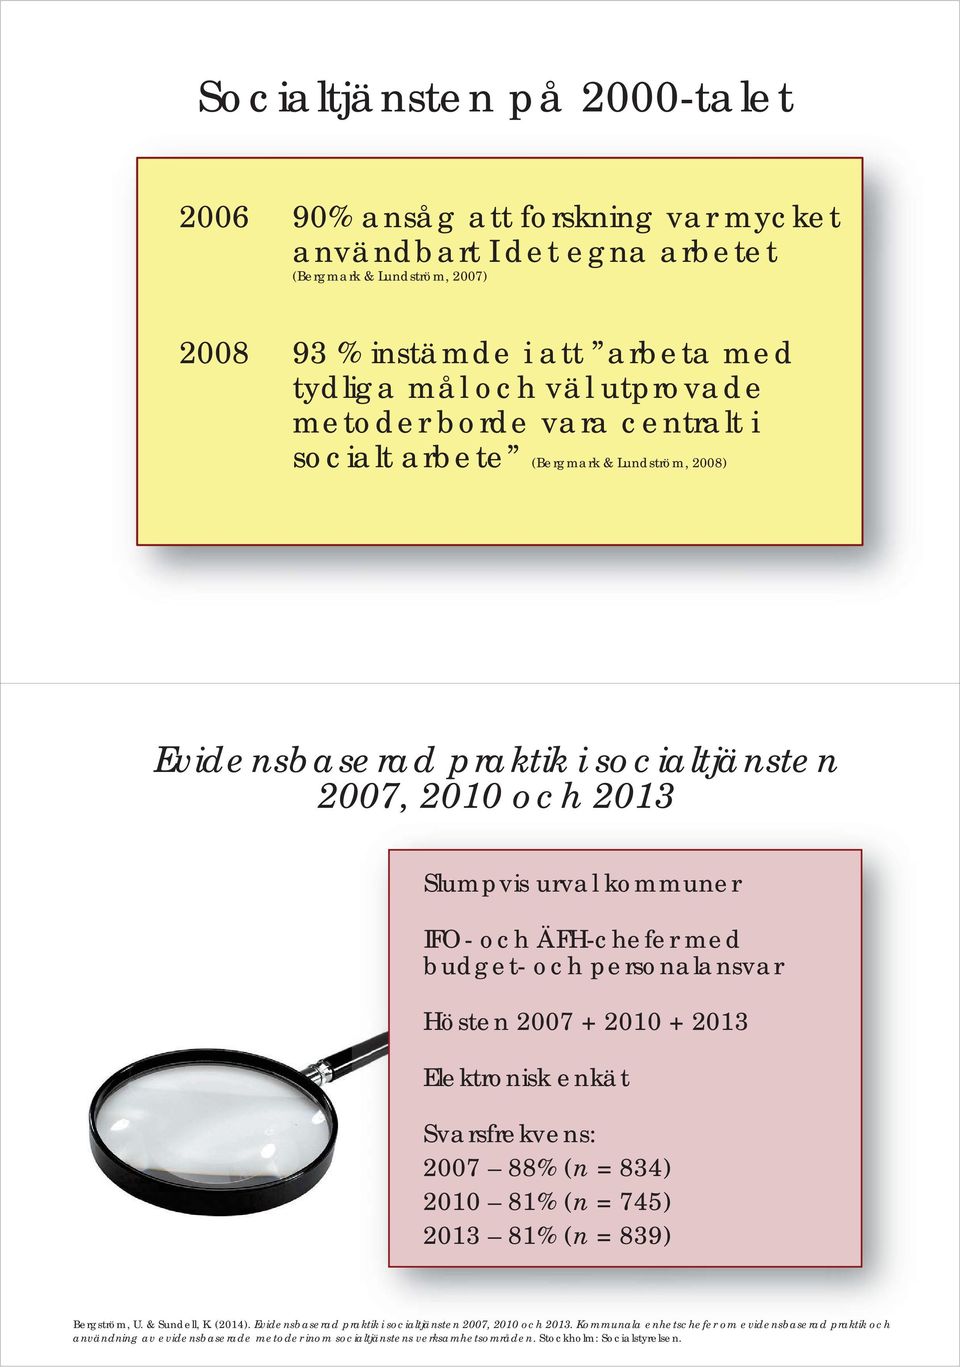 personalansvar Hösten 2007 + 2010 + 2013 Elektronisk enkät Svarsfrekvens: 2007 88% (n = 834) 2010 81% (n = 745) 2013 81% (n = 839) Bergström, U. & Sundell, K. (2014).